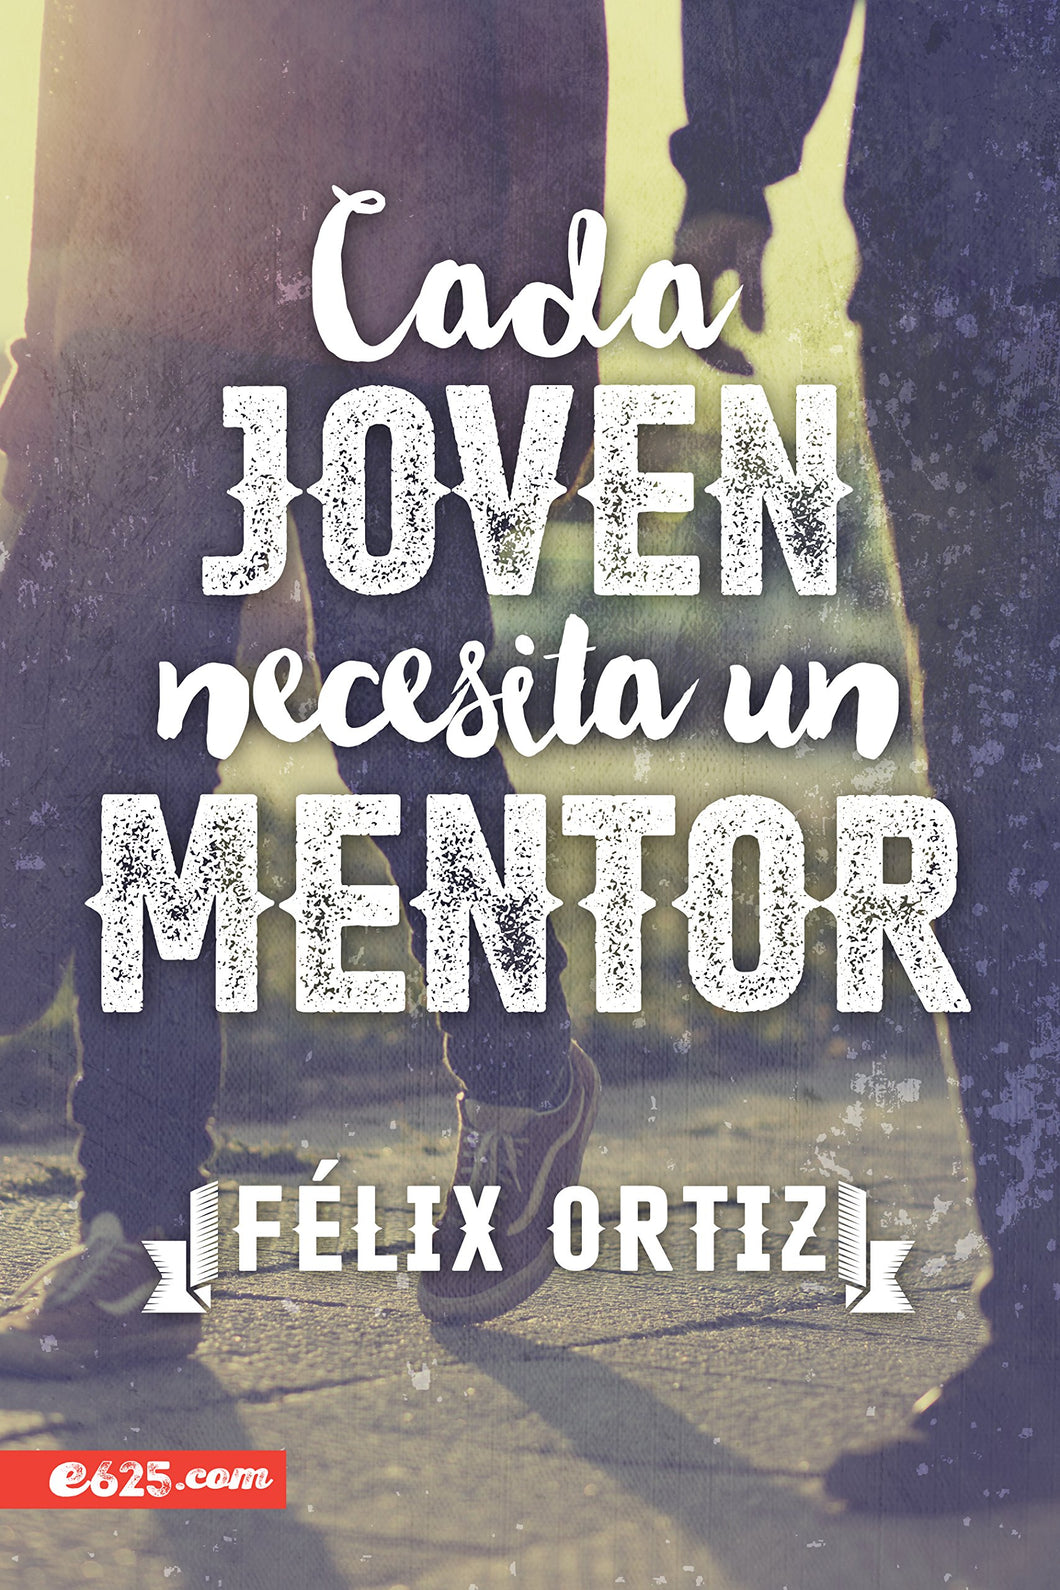 Cada joven necesita un mentor - Felix Ortiz by Especialidades 625